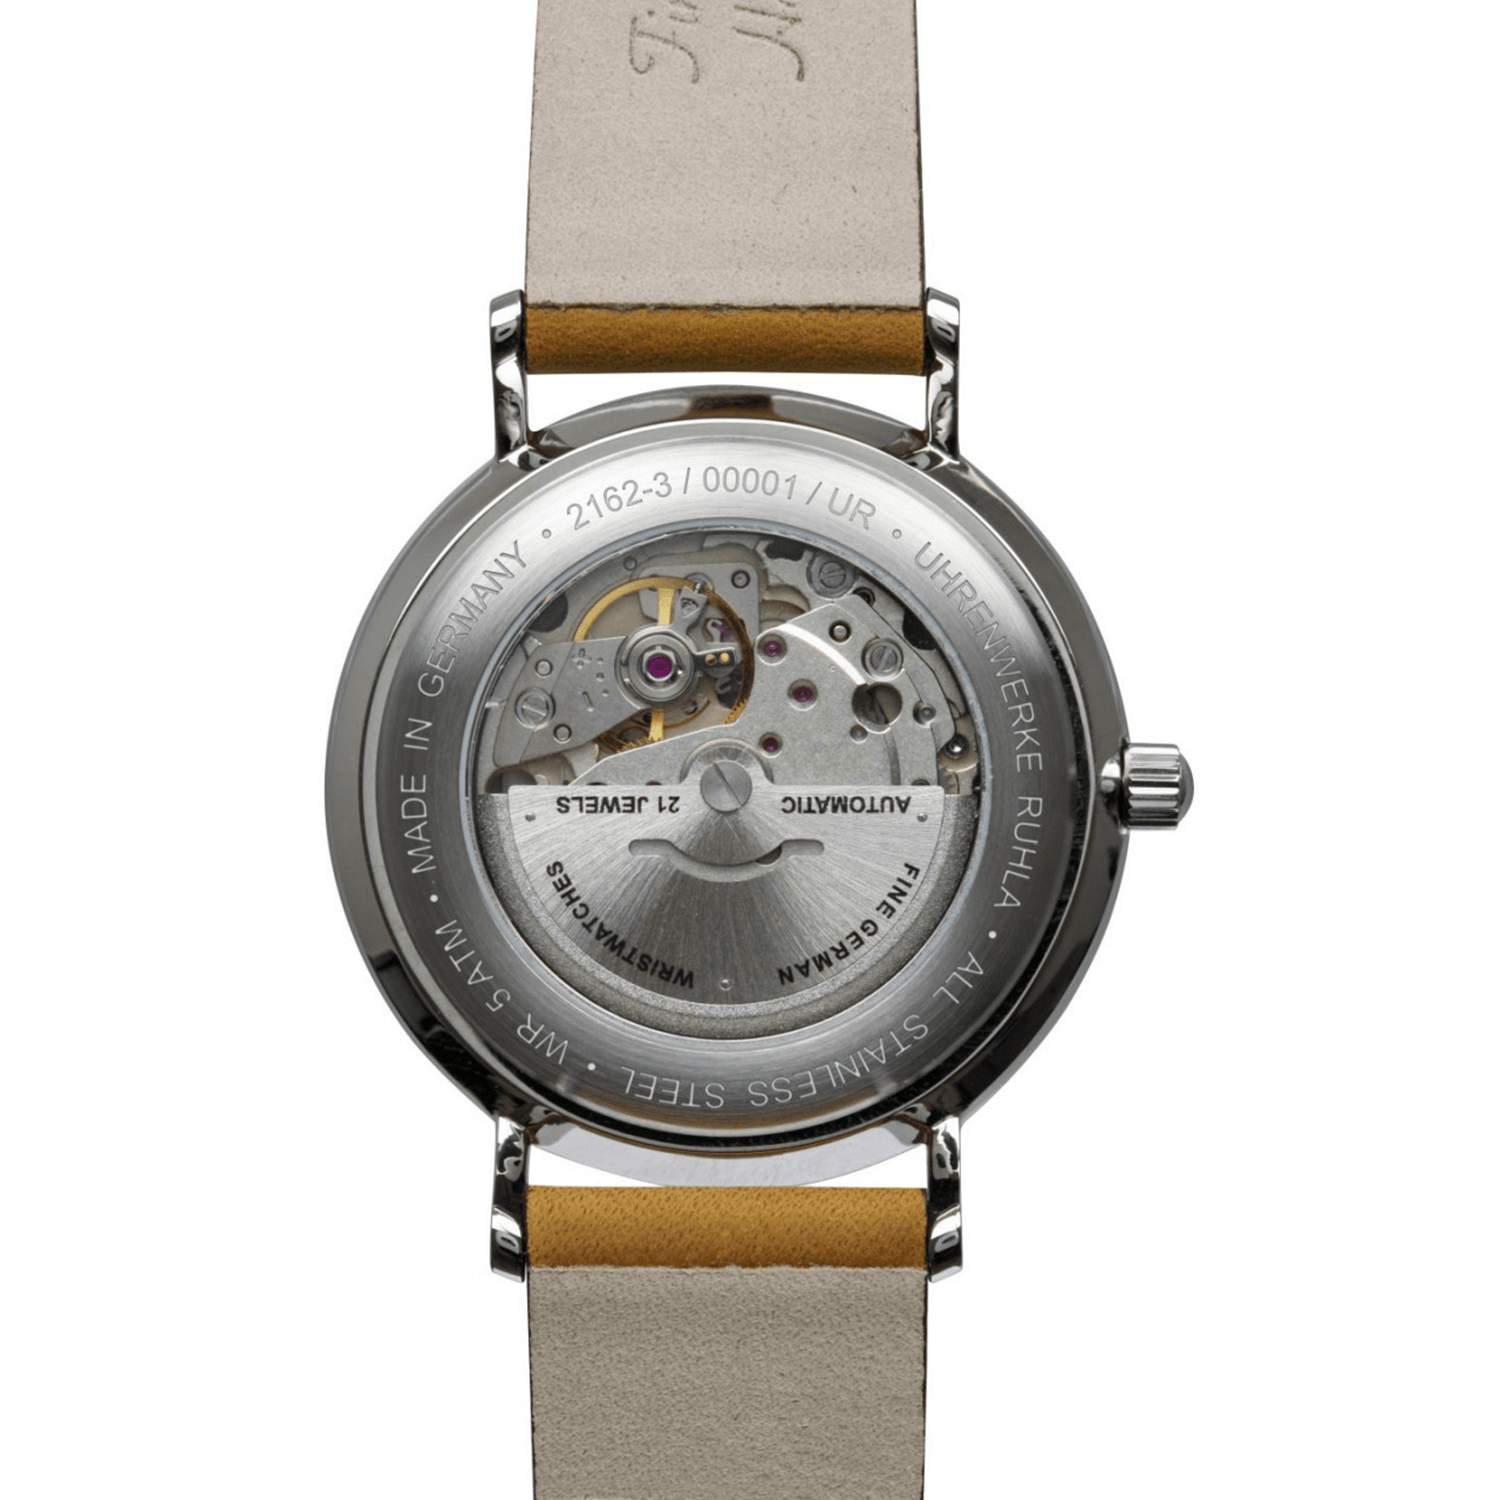 Bauhaus Watch 21623. Bauhaus Movement